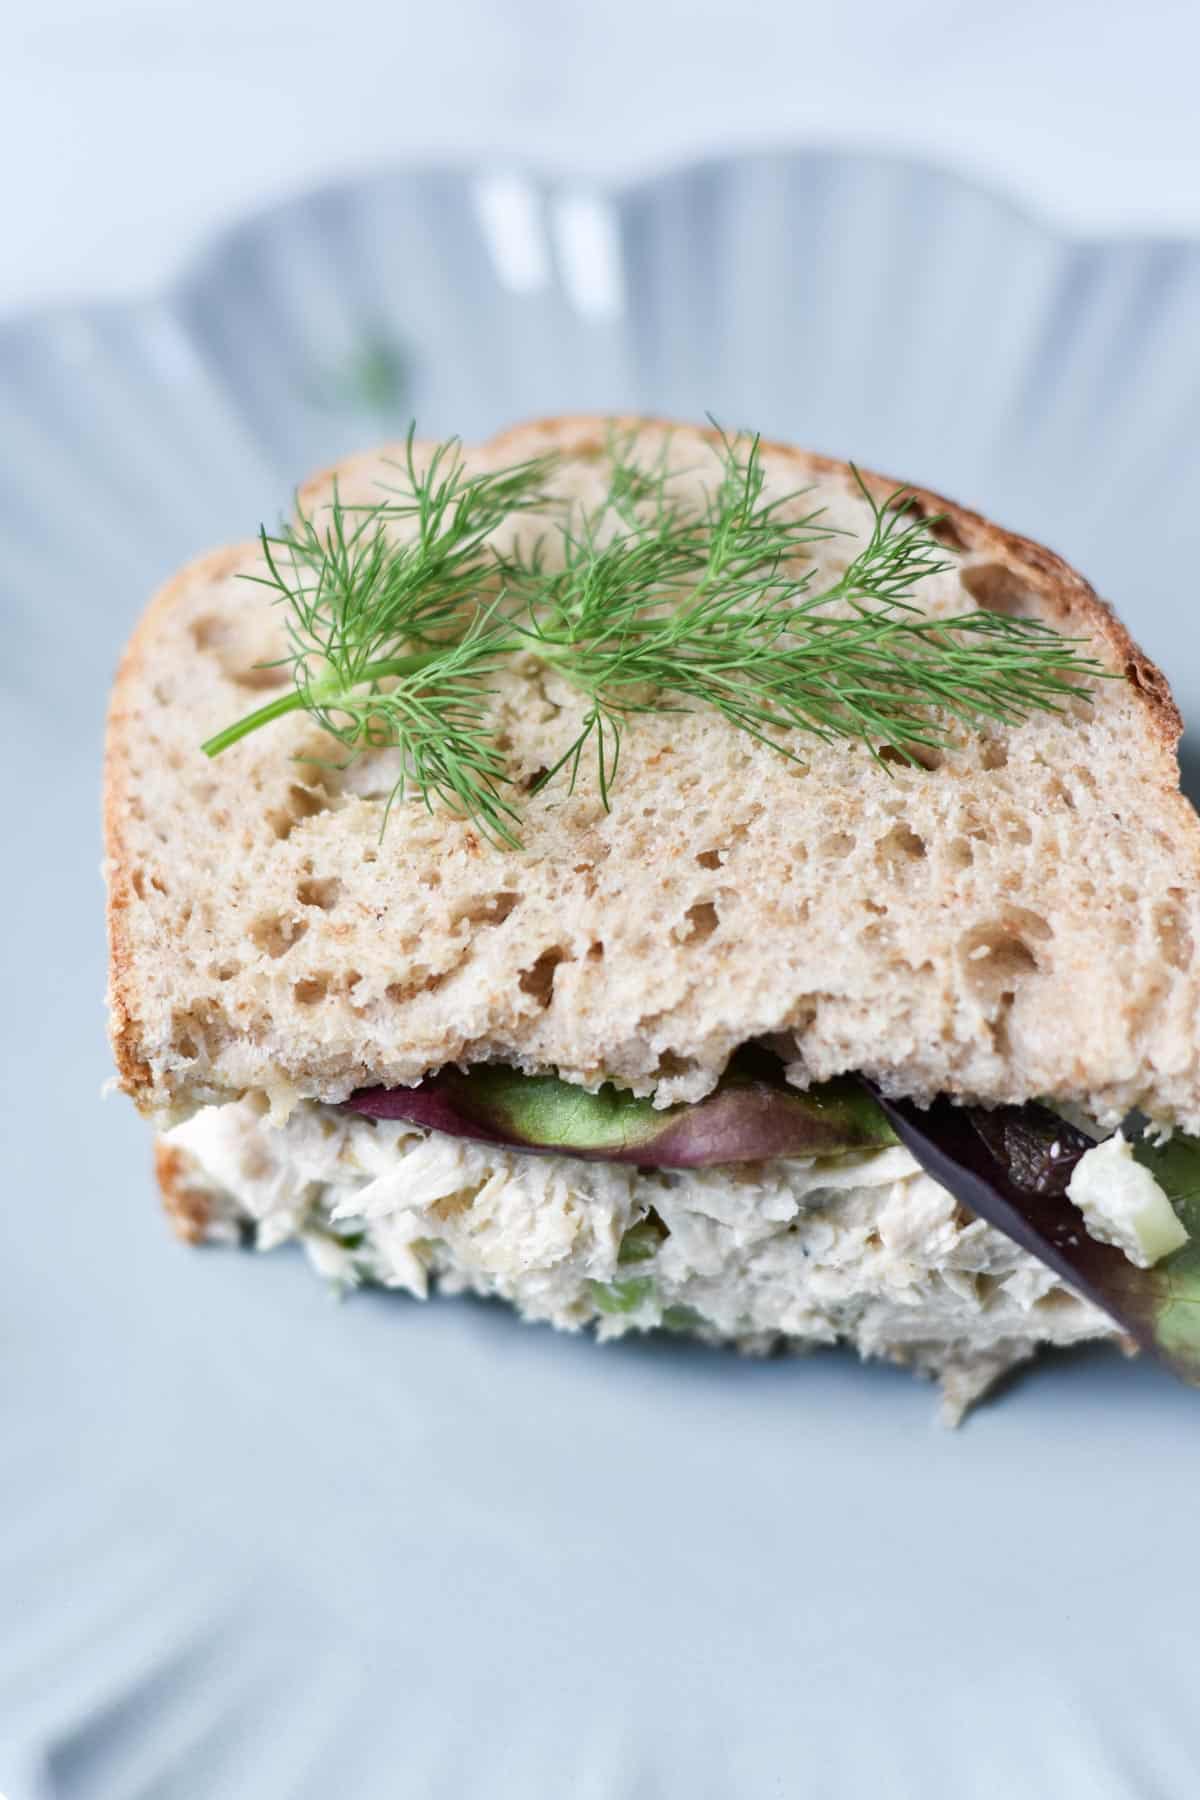 Tuna salad on bread with fresh dill on top.